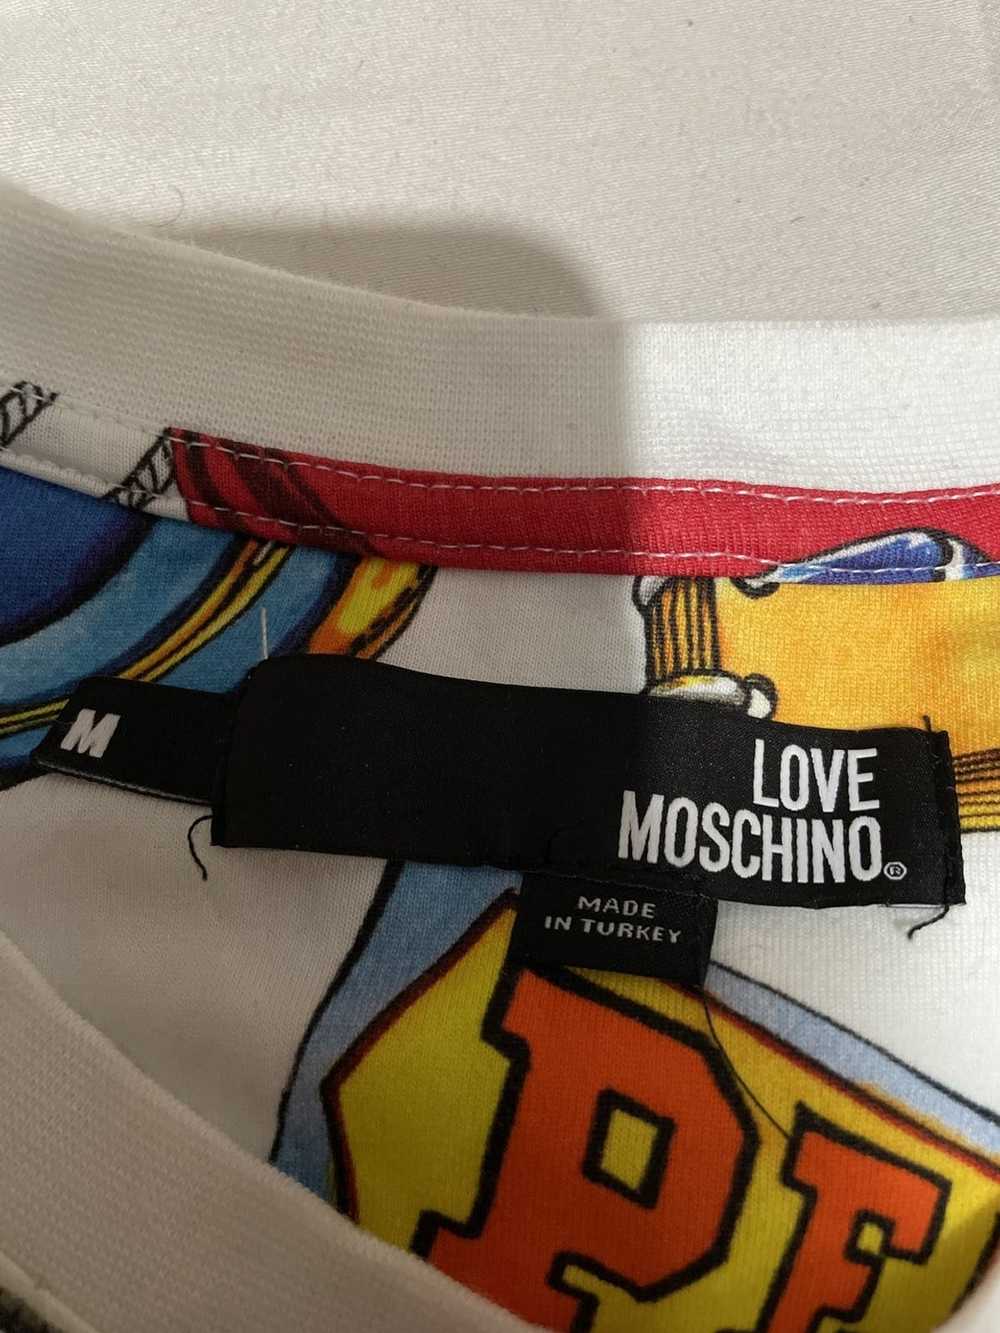 Moschino Moschino Sports Kit T Shirt - image 4